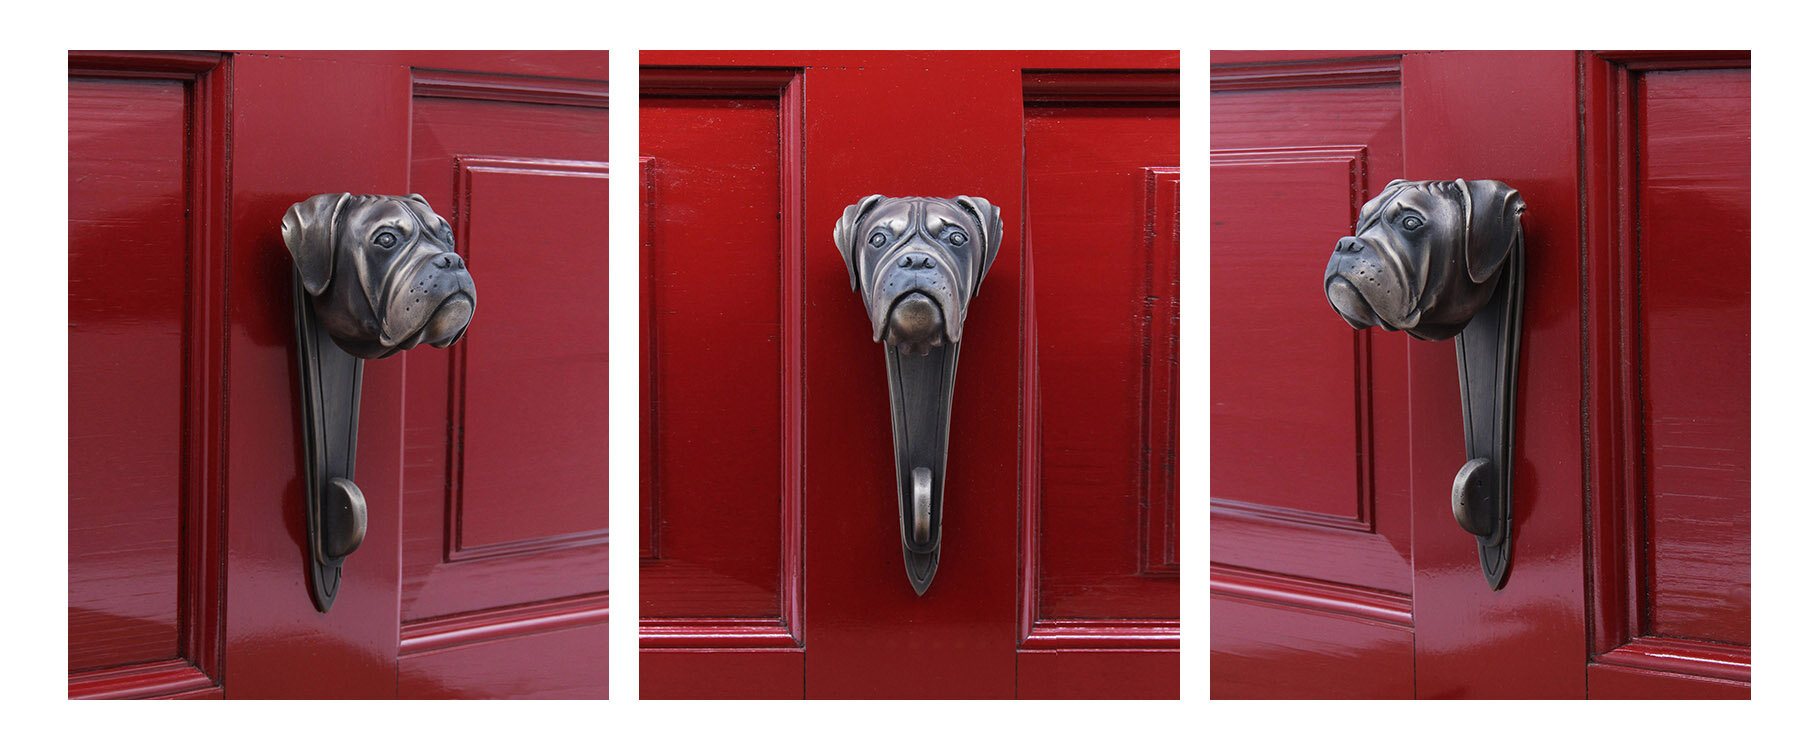 animal door knobs — Blog - Martin Pierce